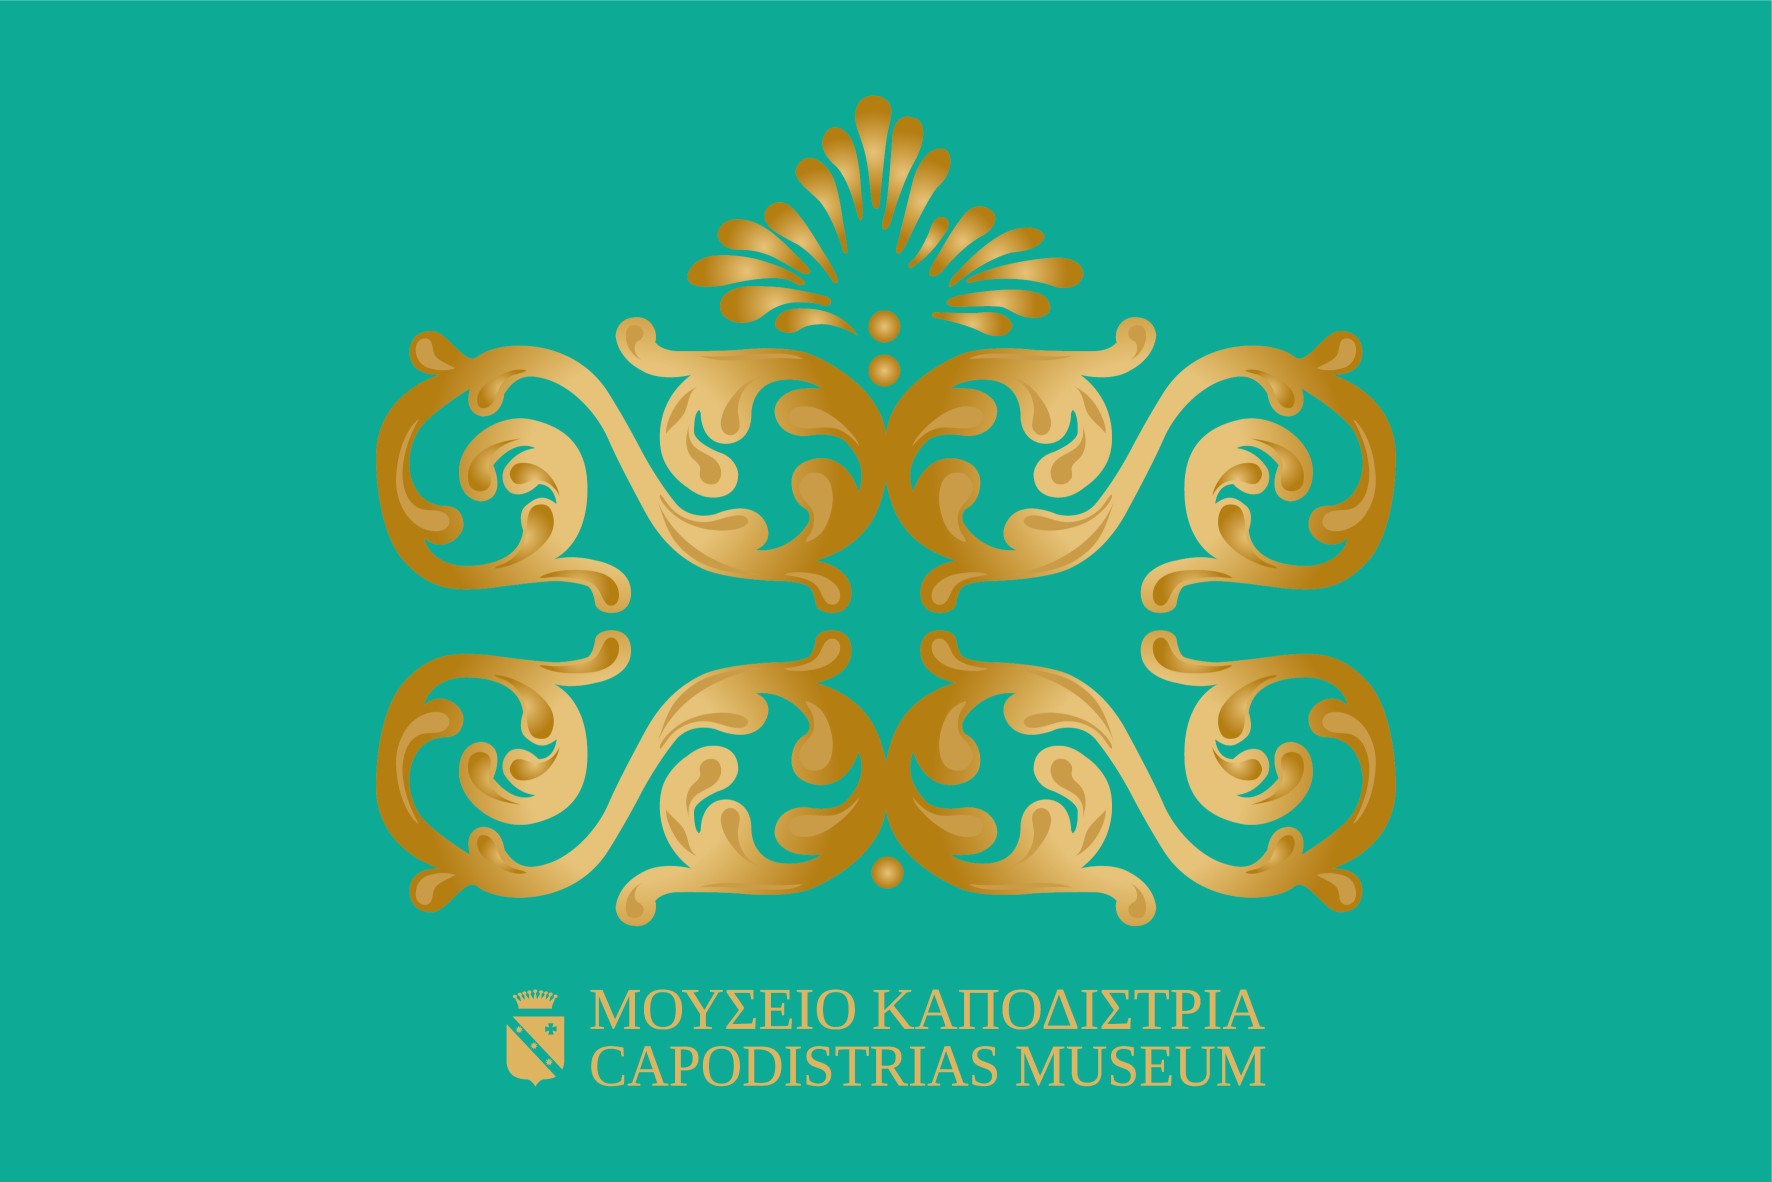 Capodistrias Museum, Corfu, Greece